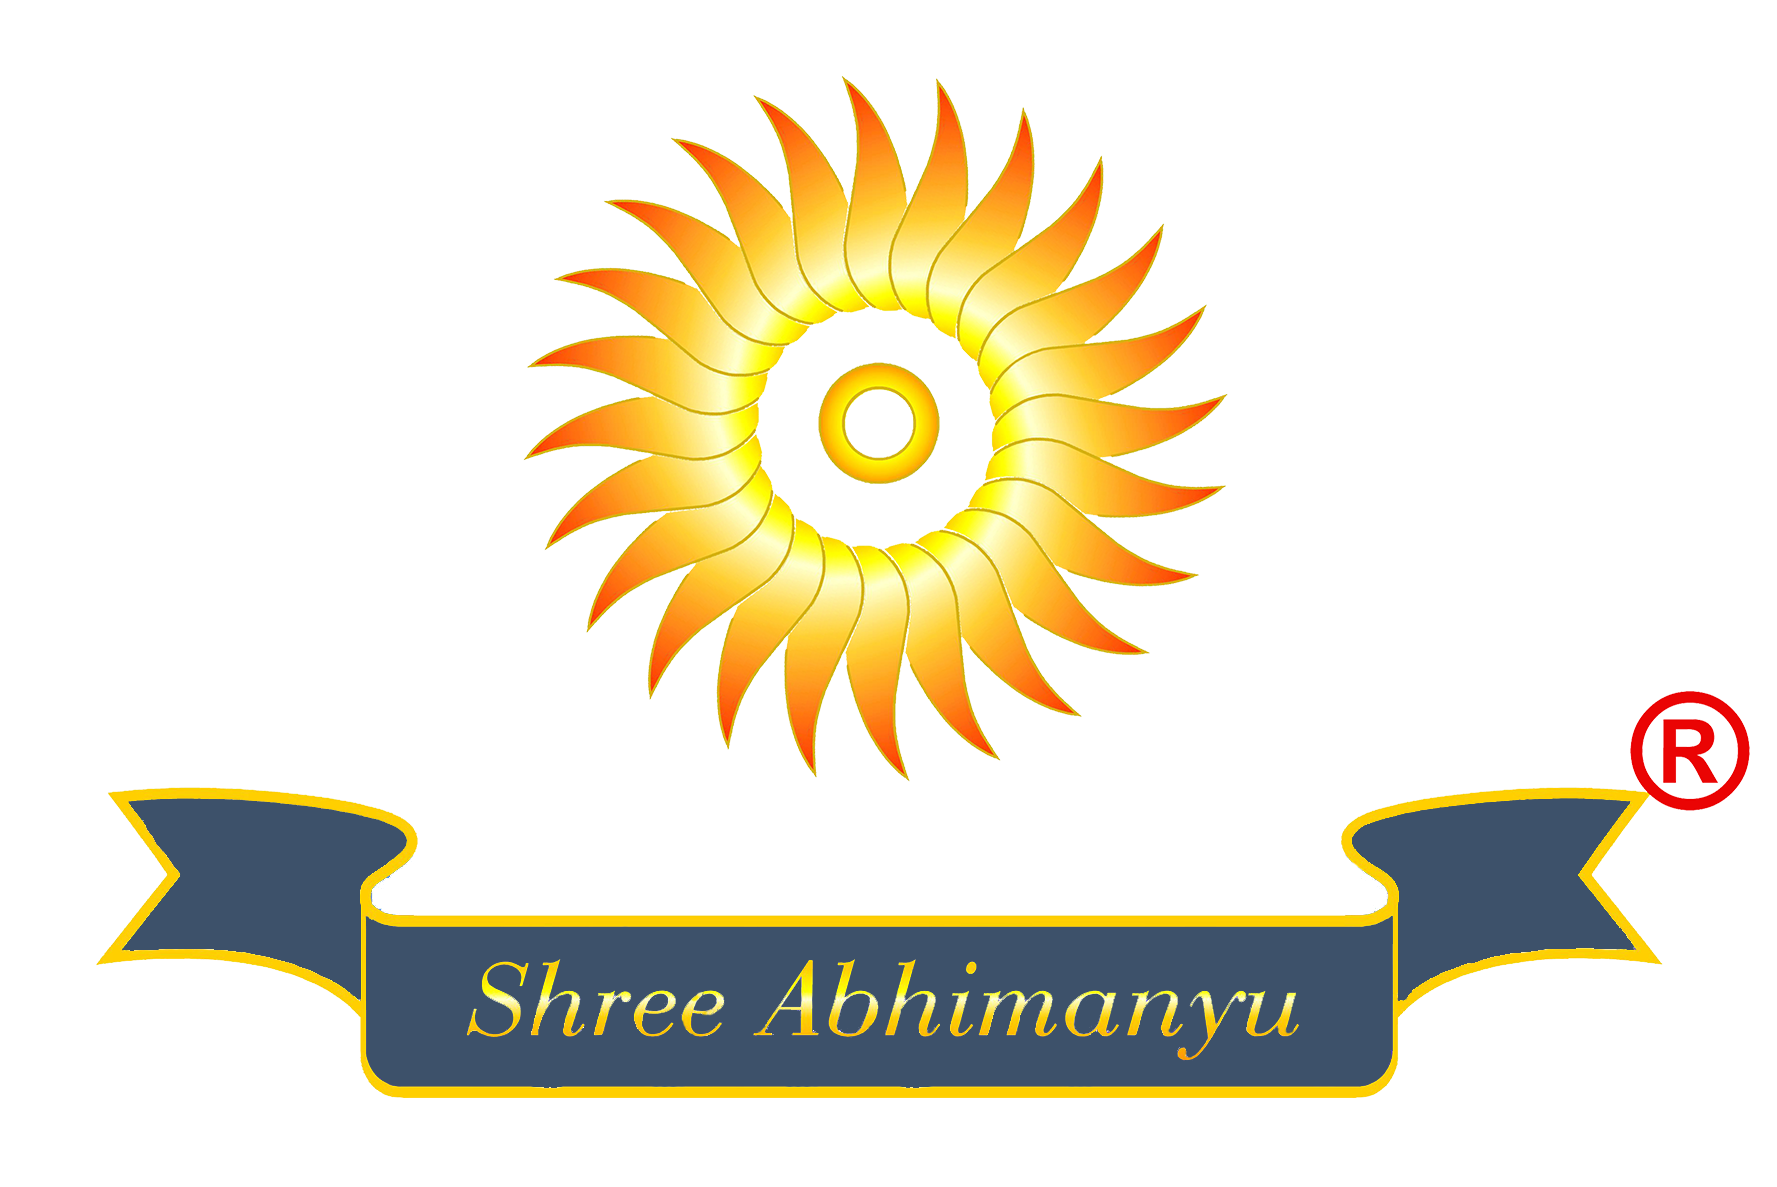 Shree Abhimanyu